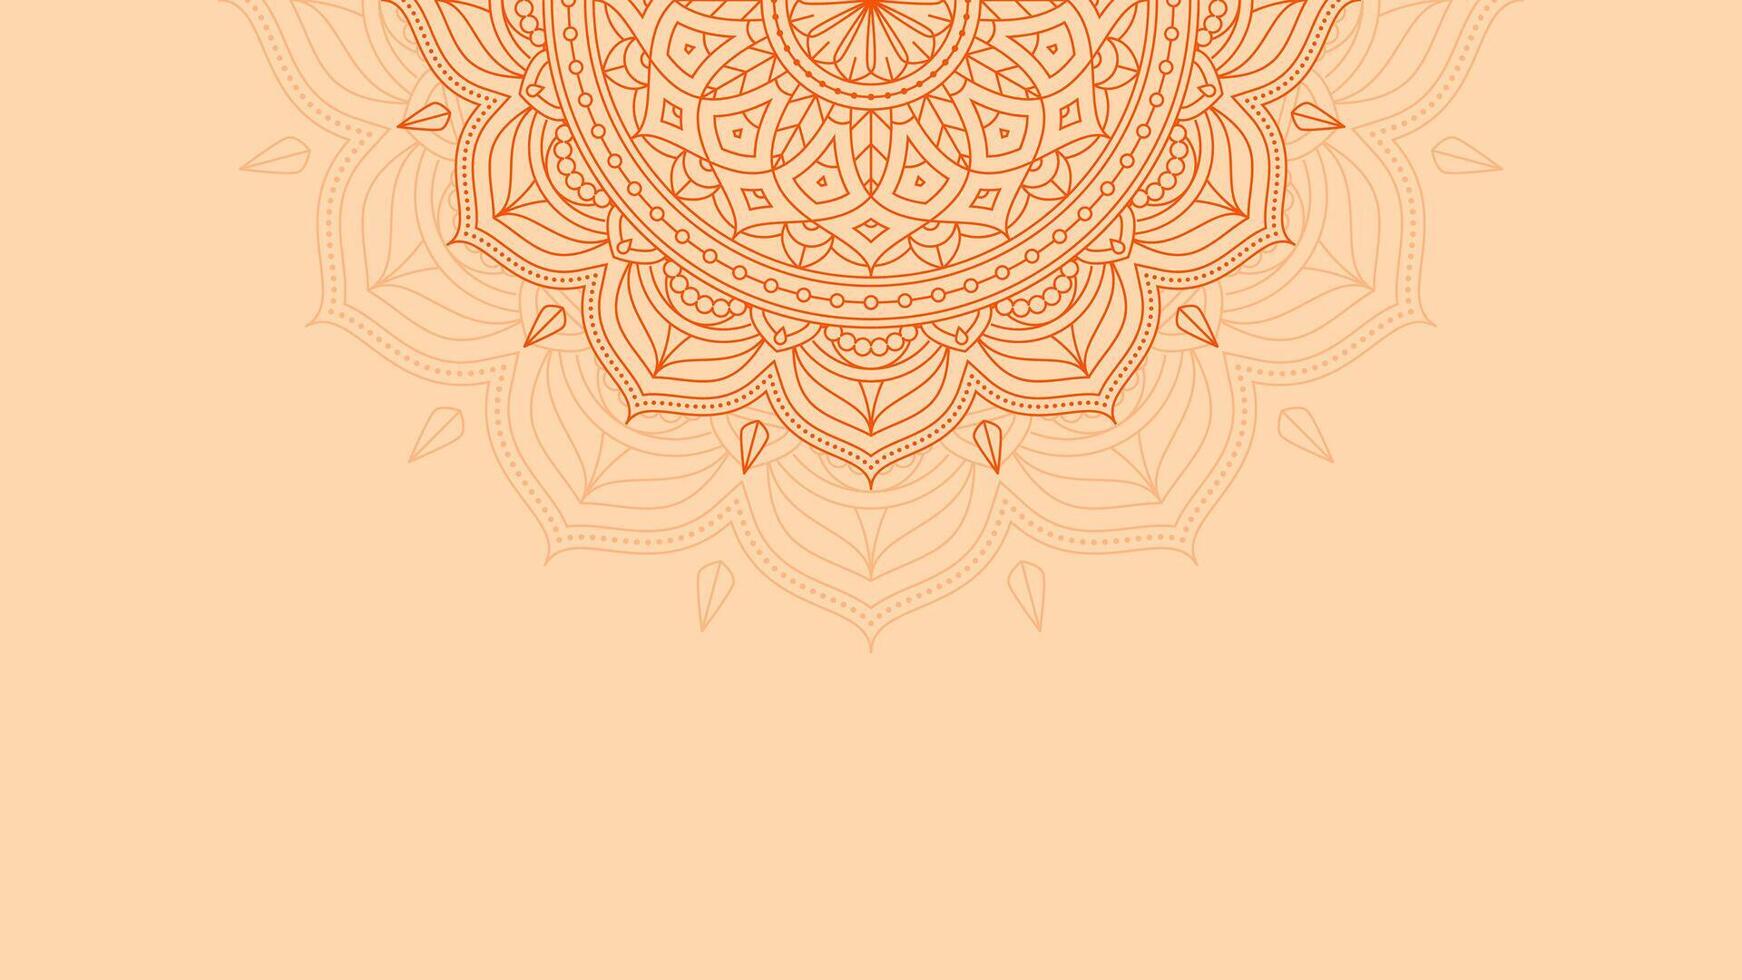 rik citrus- elegans tom horisontell vektor bakgrund dekorerad med invecklad orange skala lotus mandala ornament